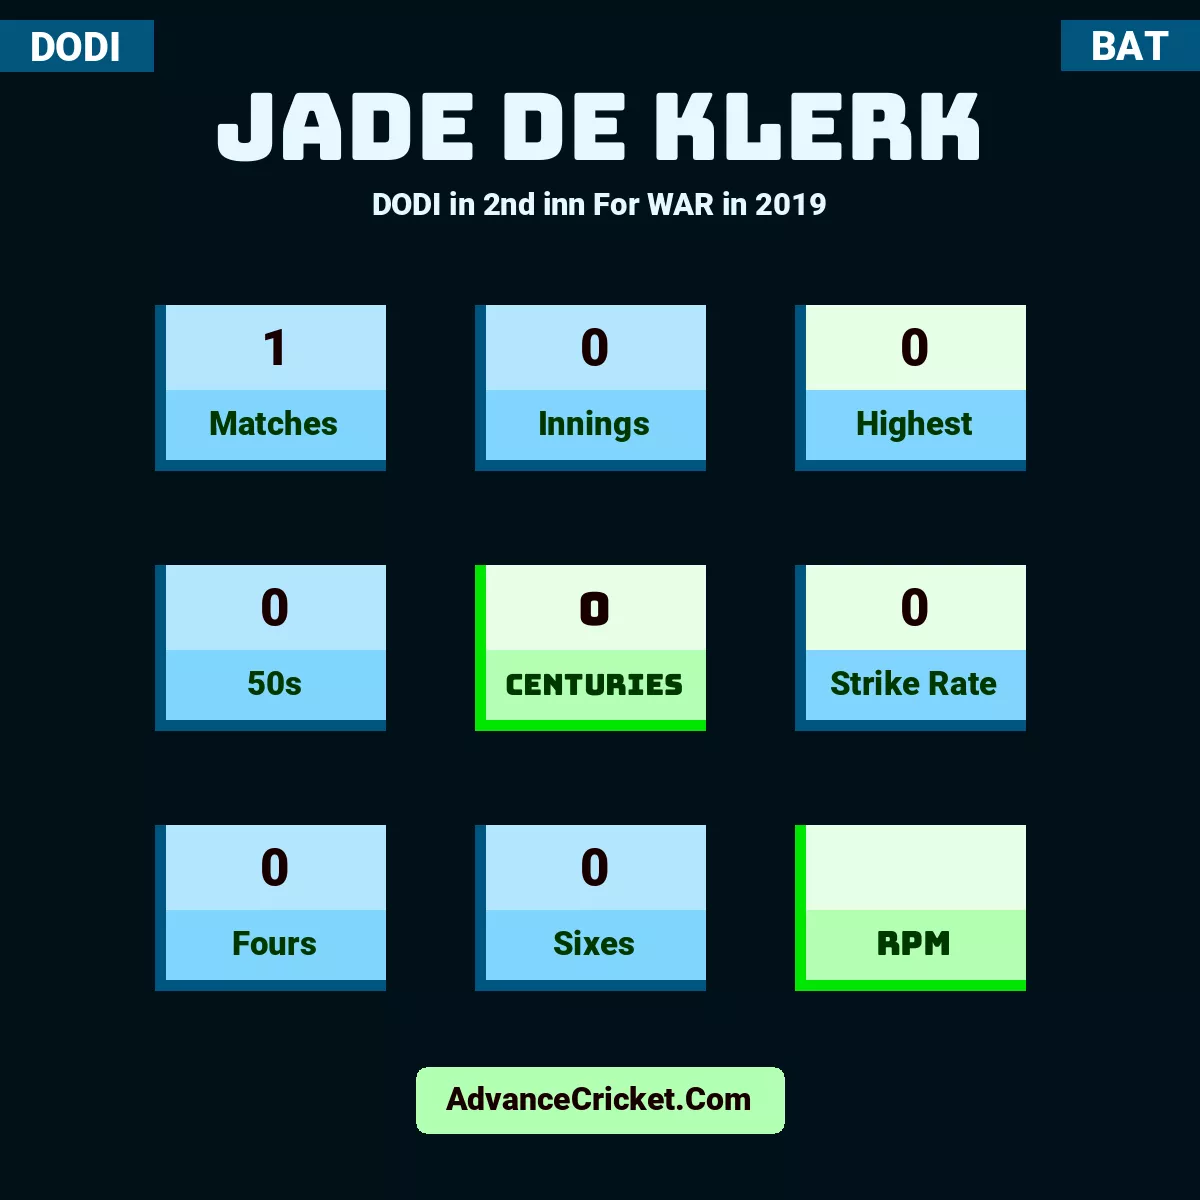 Jade de Klerk DODI  in 2nd inn For WAR in 2019, Jade de Klerk played 1 matches, scored 0 runs as highest, 0 half-centuries, and 0 centuries, with a strike rate of 0. J.Klerk hit 0 fours and 0 sixes.